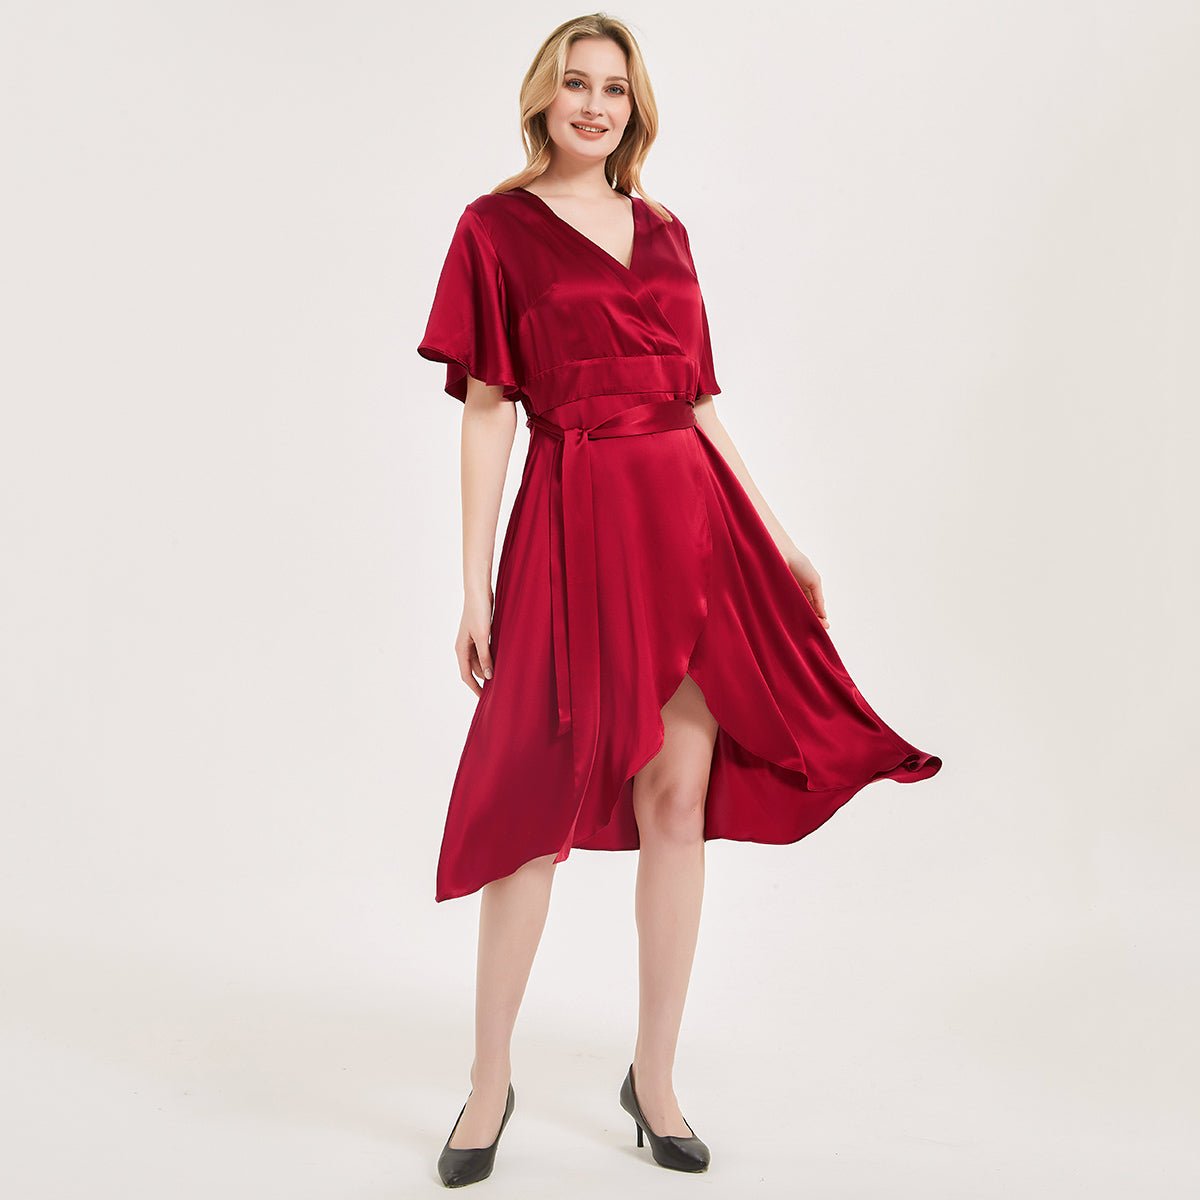 Women Silk Wrap Dress Pure 100% Real Mulberry Silk Dresses - slipintosoft